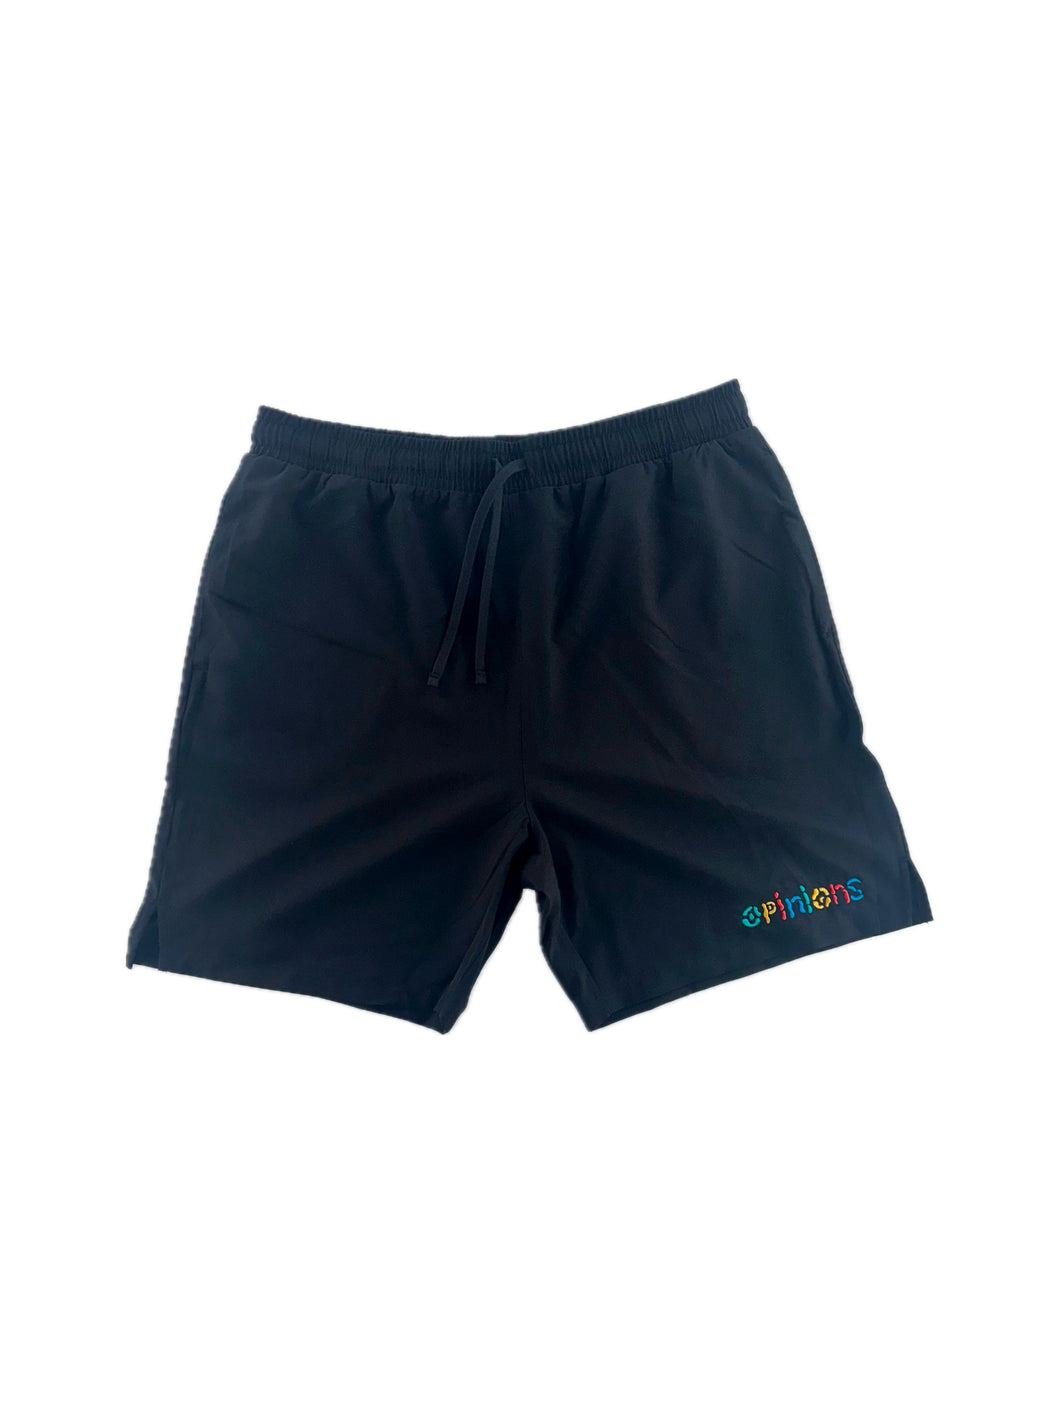 Brazil logo Training Shorts (Black)